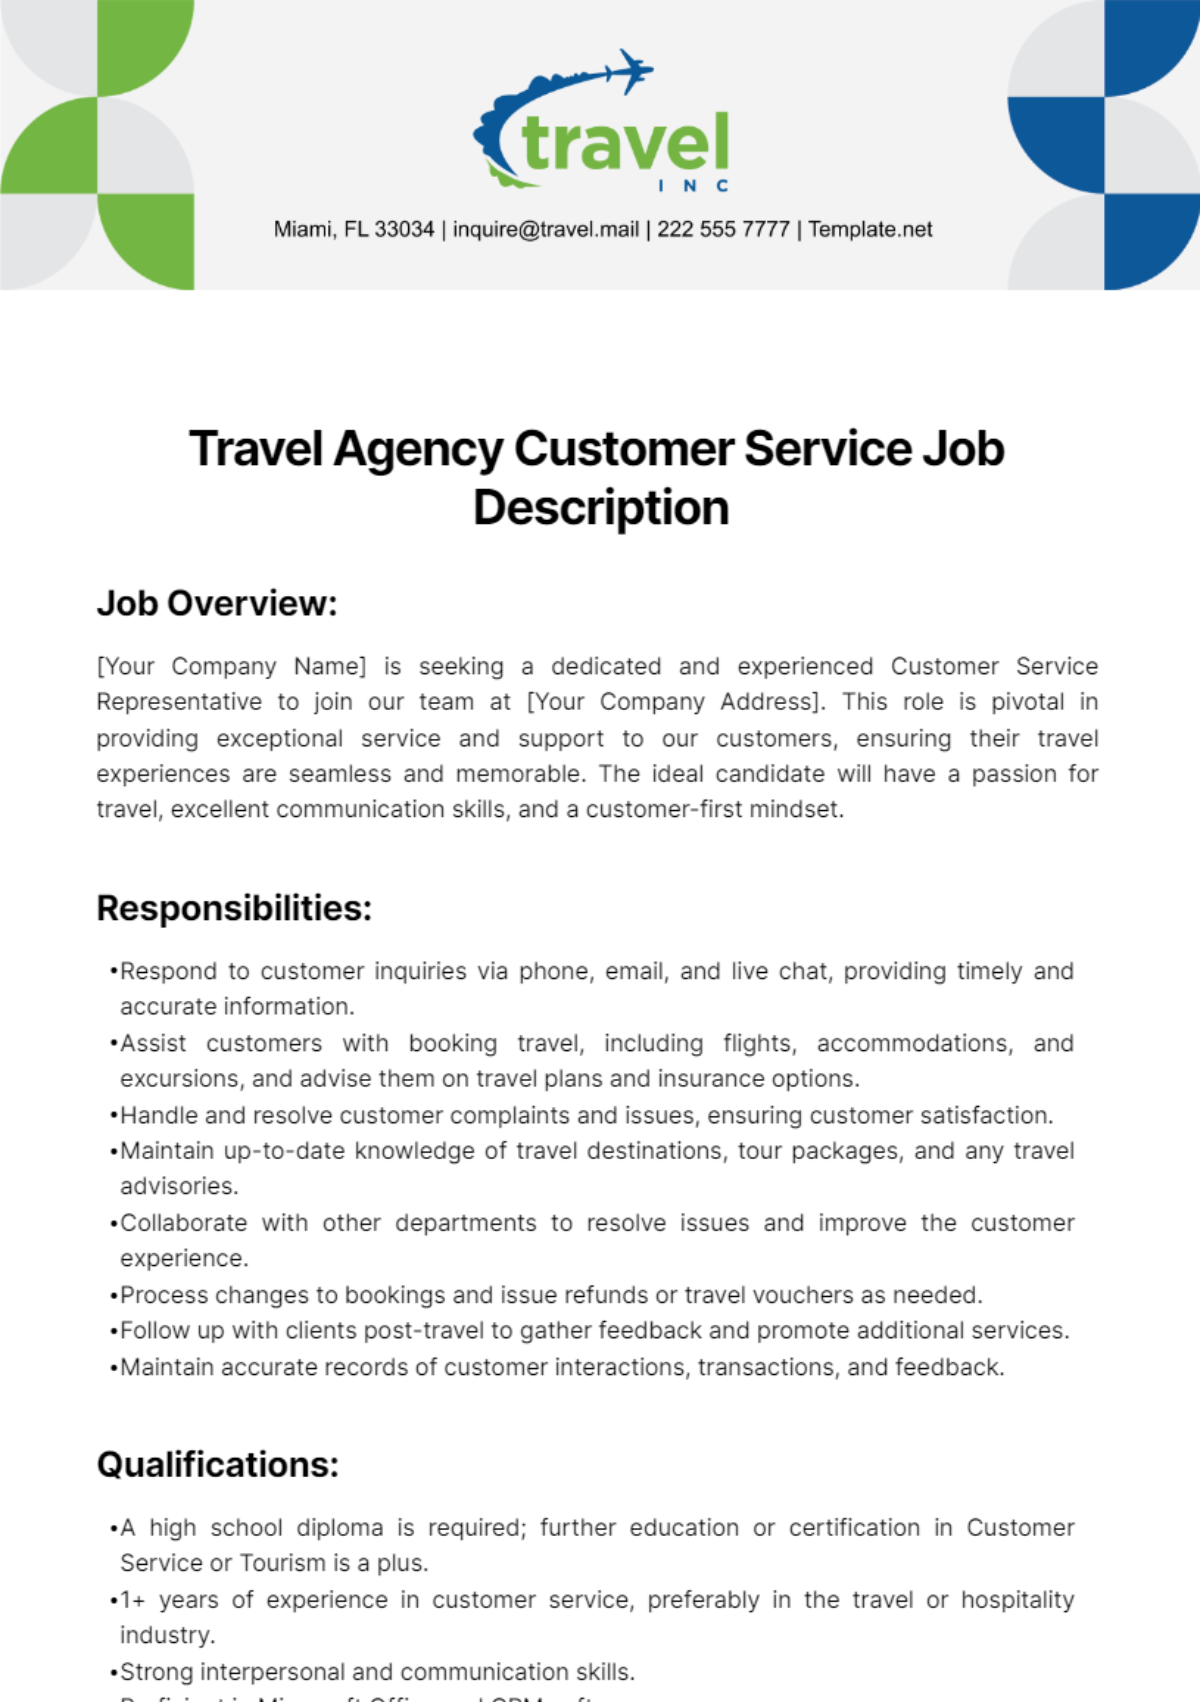 Travel Agency Customer Service Job Description Template